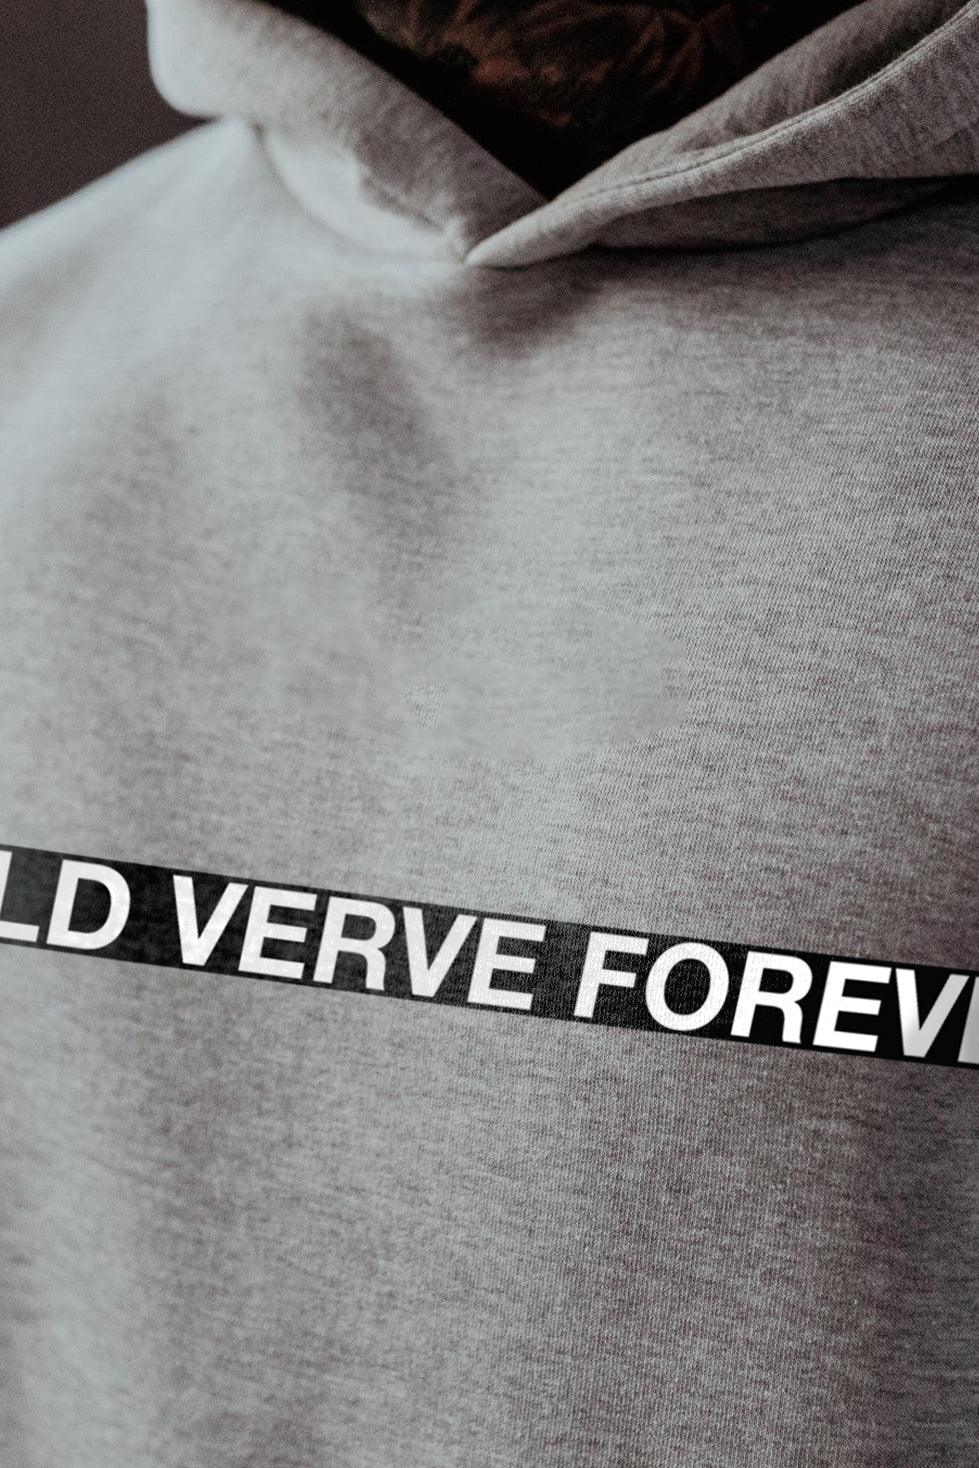 WILD VERVE FOREVER Streetwear Coord (grey melange) - THEWILDVERVE